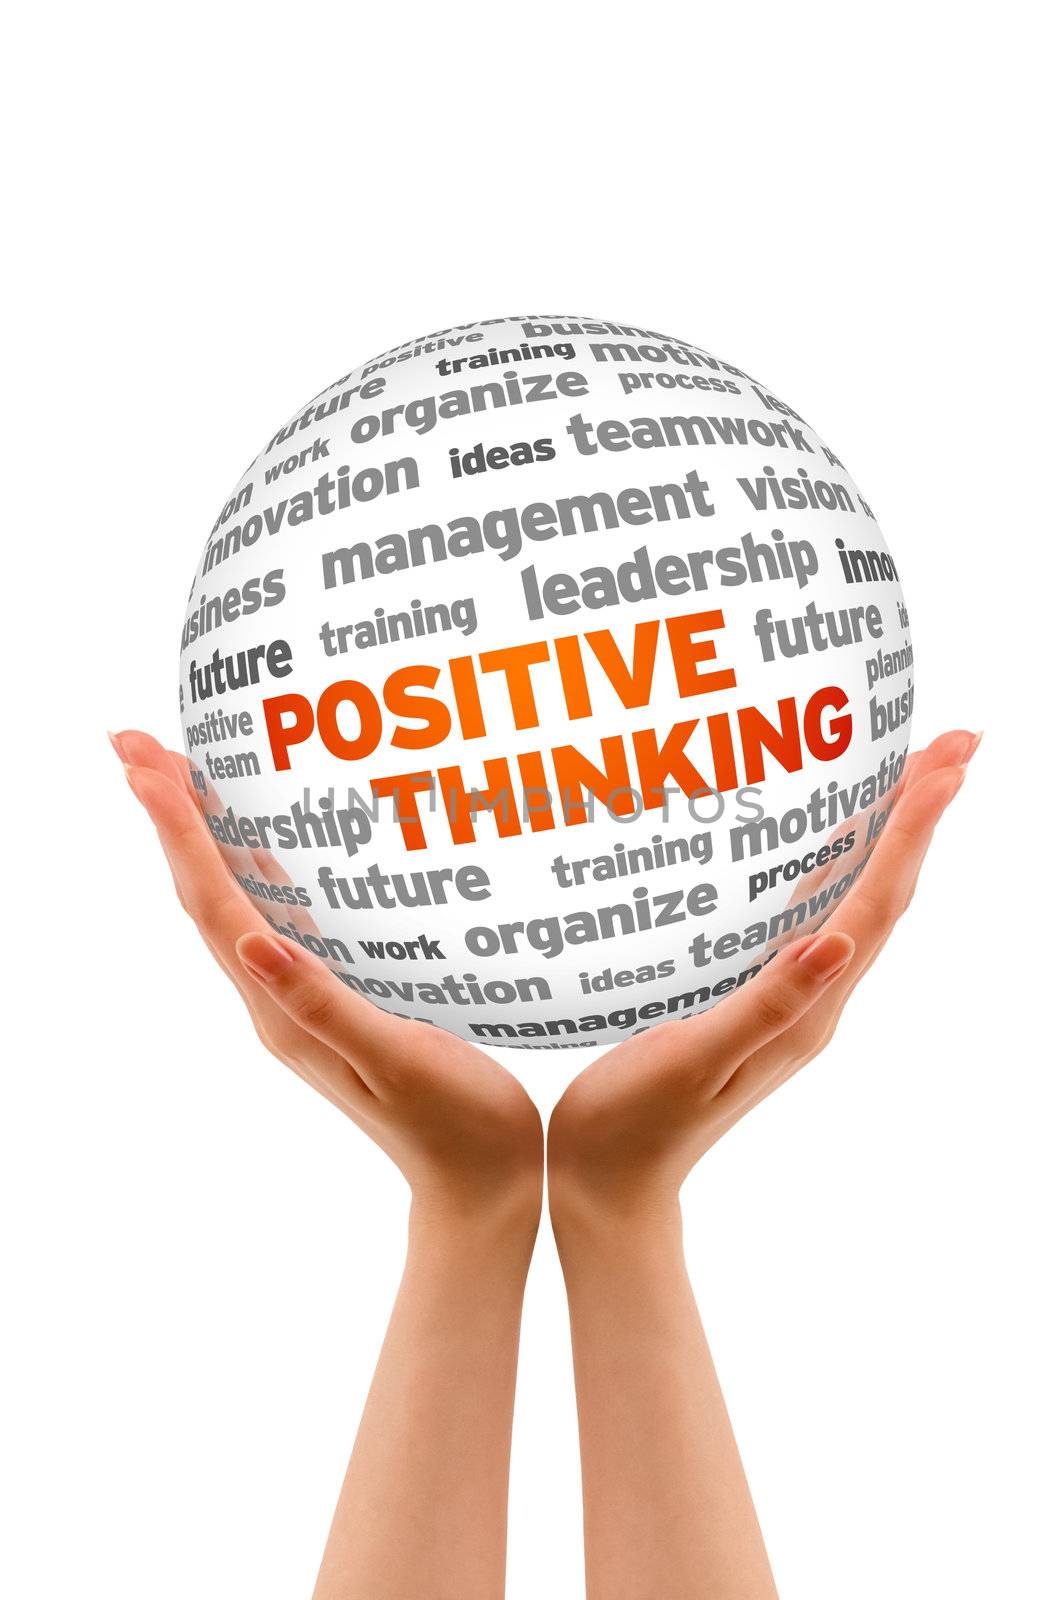 Positive Thinking by kbuntu